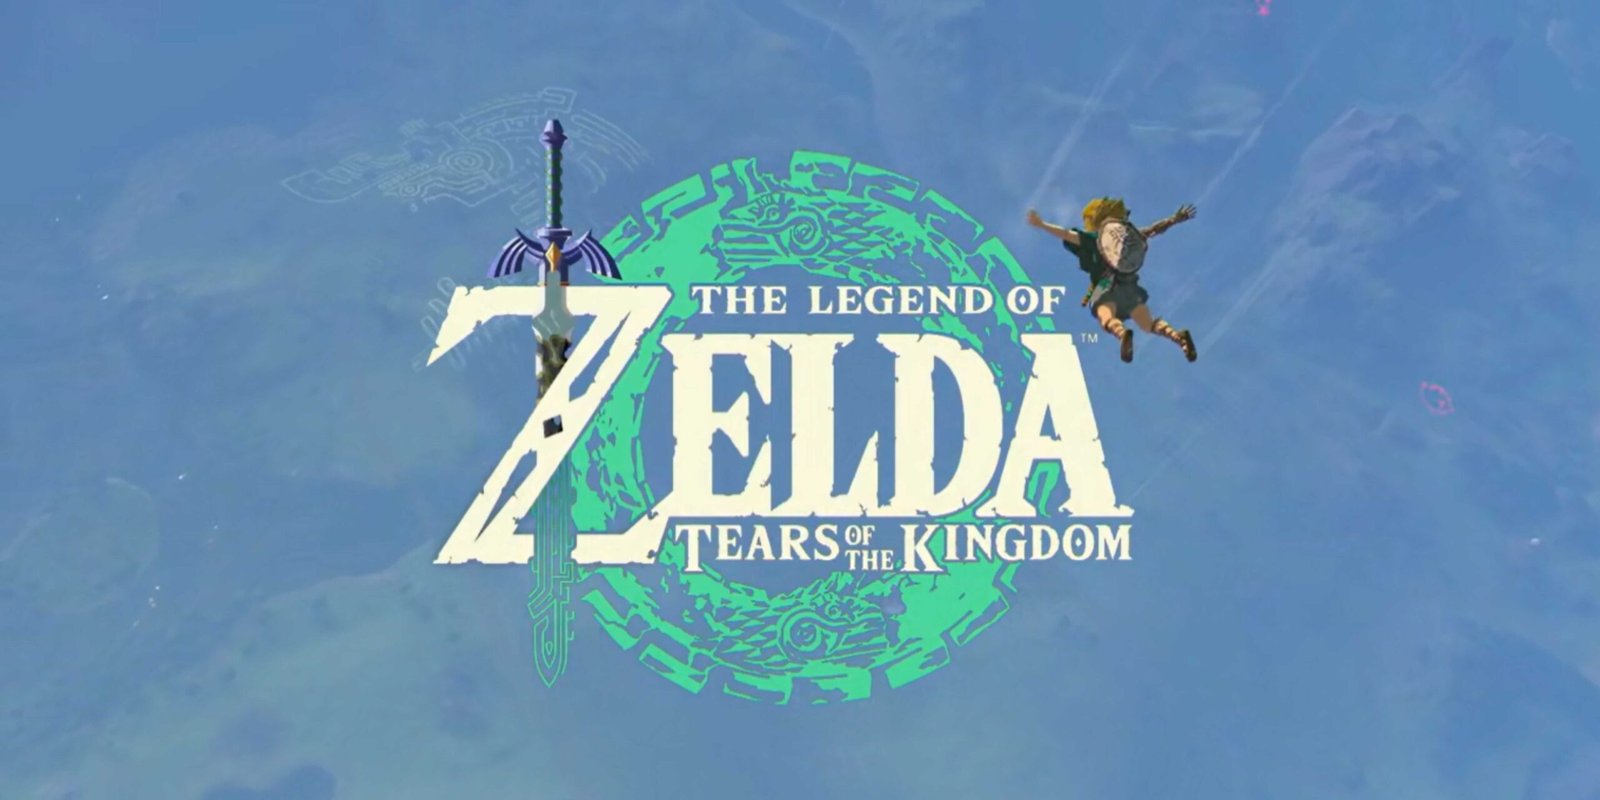 The Legend of Zelda Live-Action Movie is Finally Happening